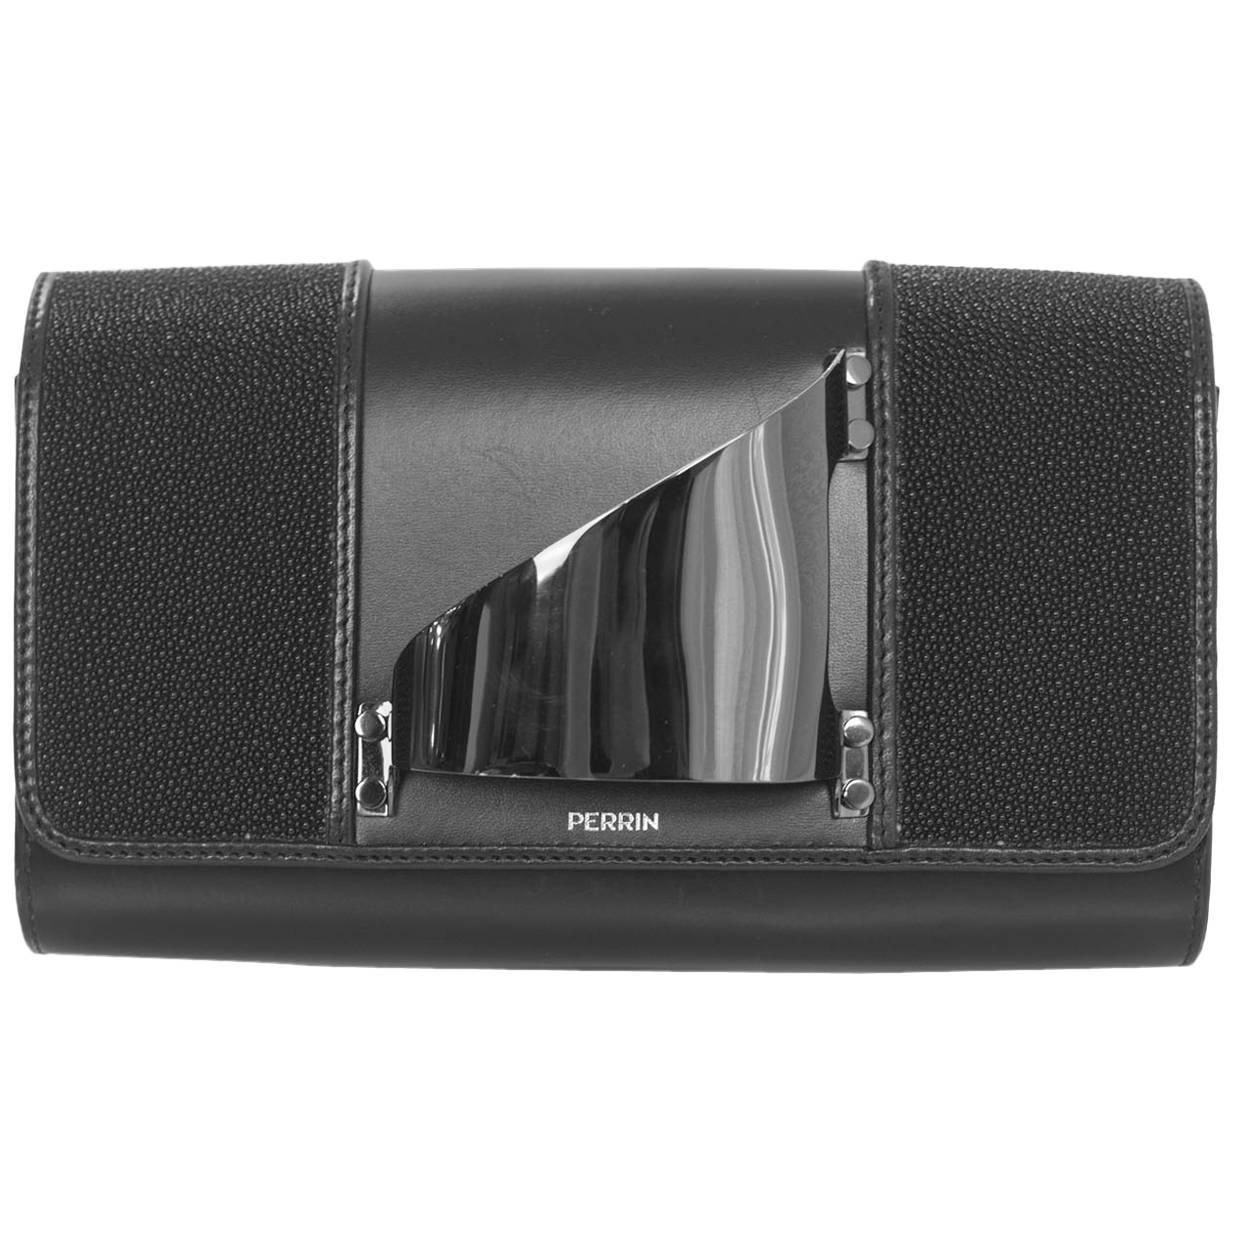 Perrin Black Leather Stingray & Gunmetal L'asymetrique Glove Clutch Bag rt $2800